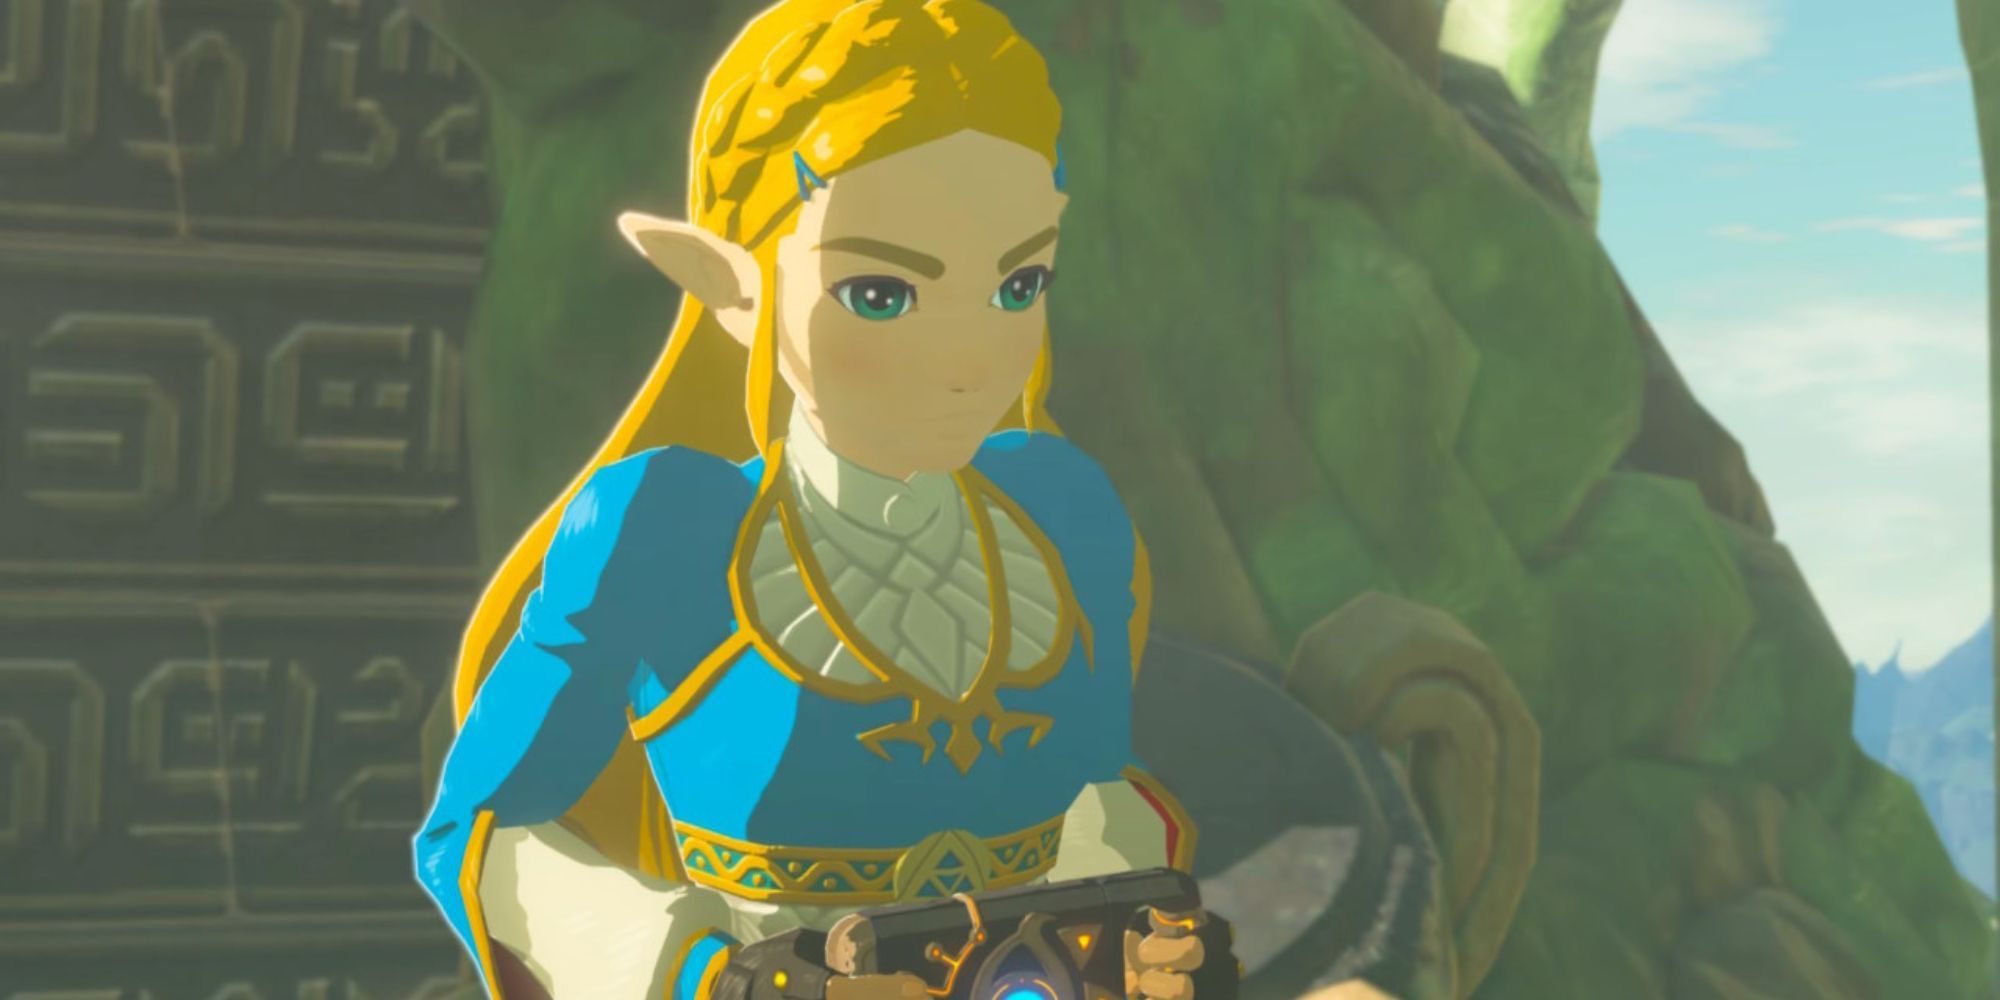 Zelda holds a Sheikah Slate in front of a Shrine